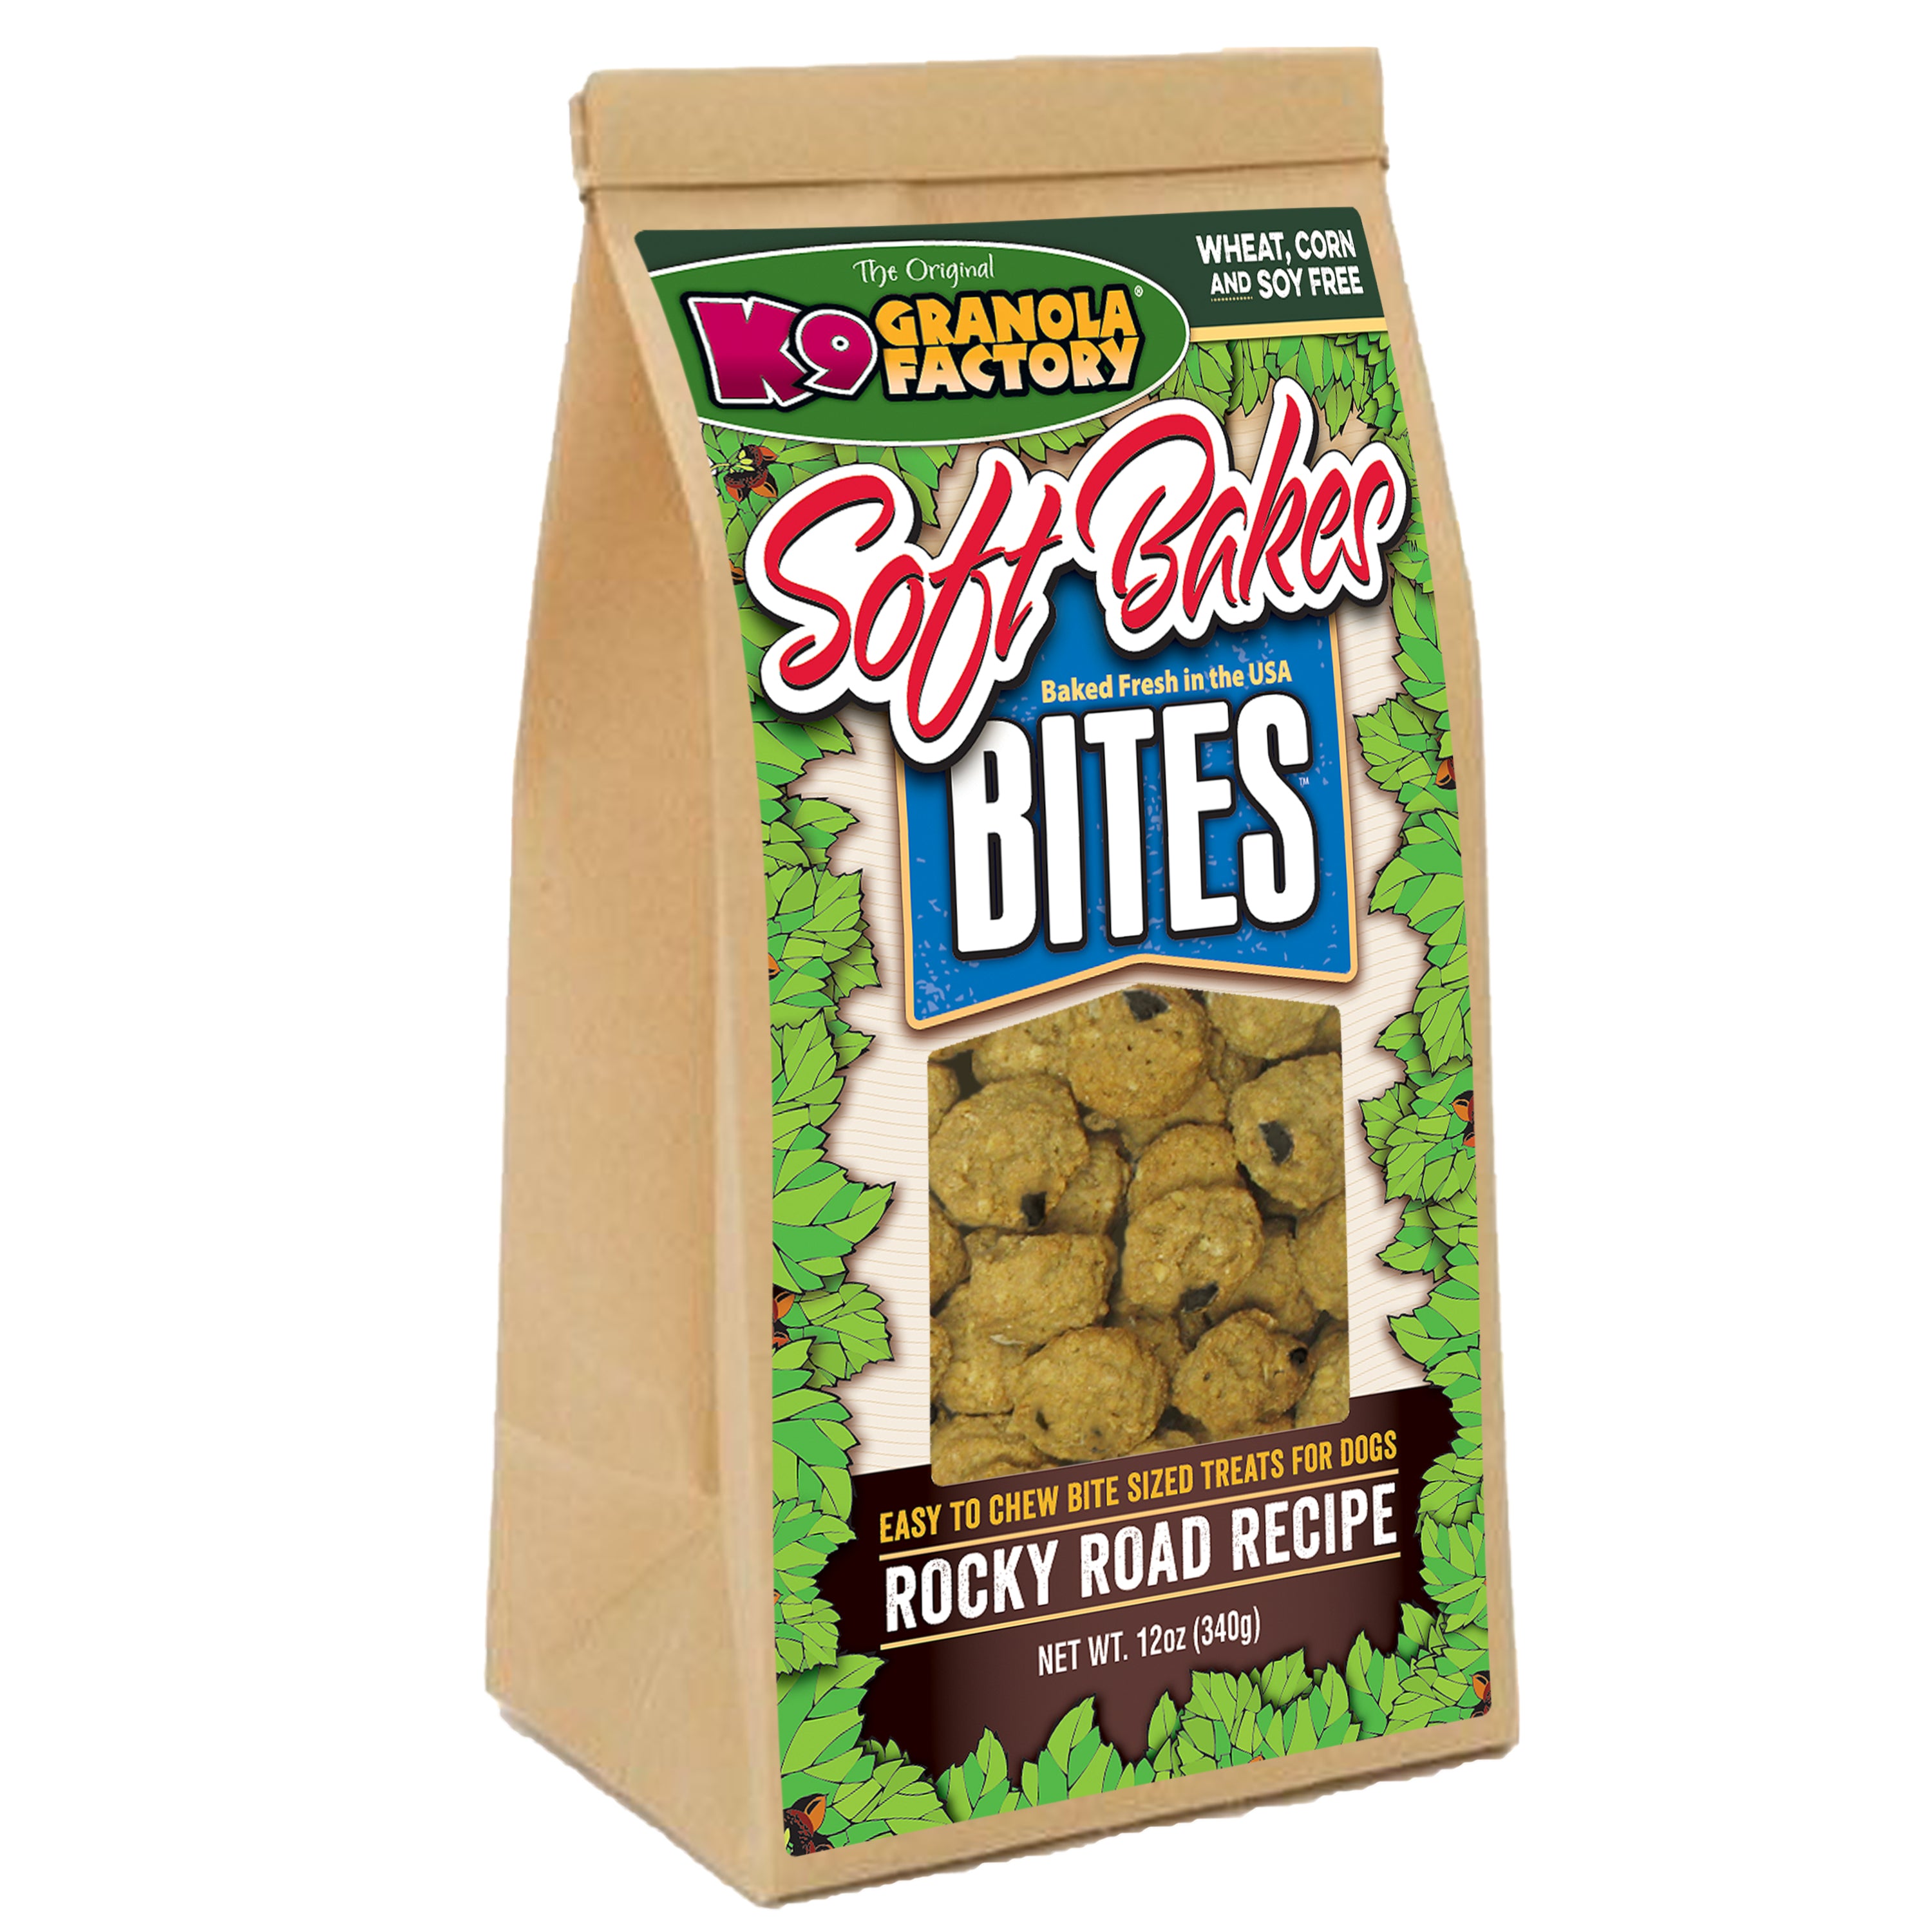 K9 Granola Factory Soft Bakes Bites Dog Treats, Rocky Road | 40% OFF Super Sale (Code: April40)